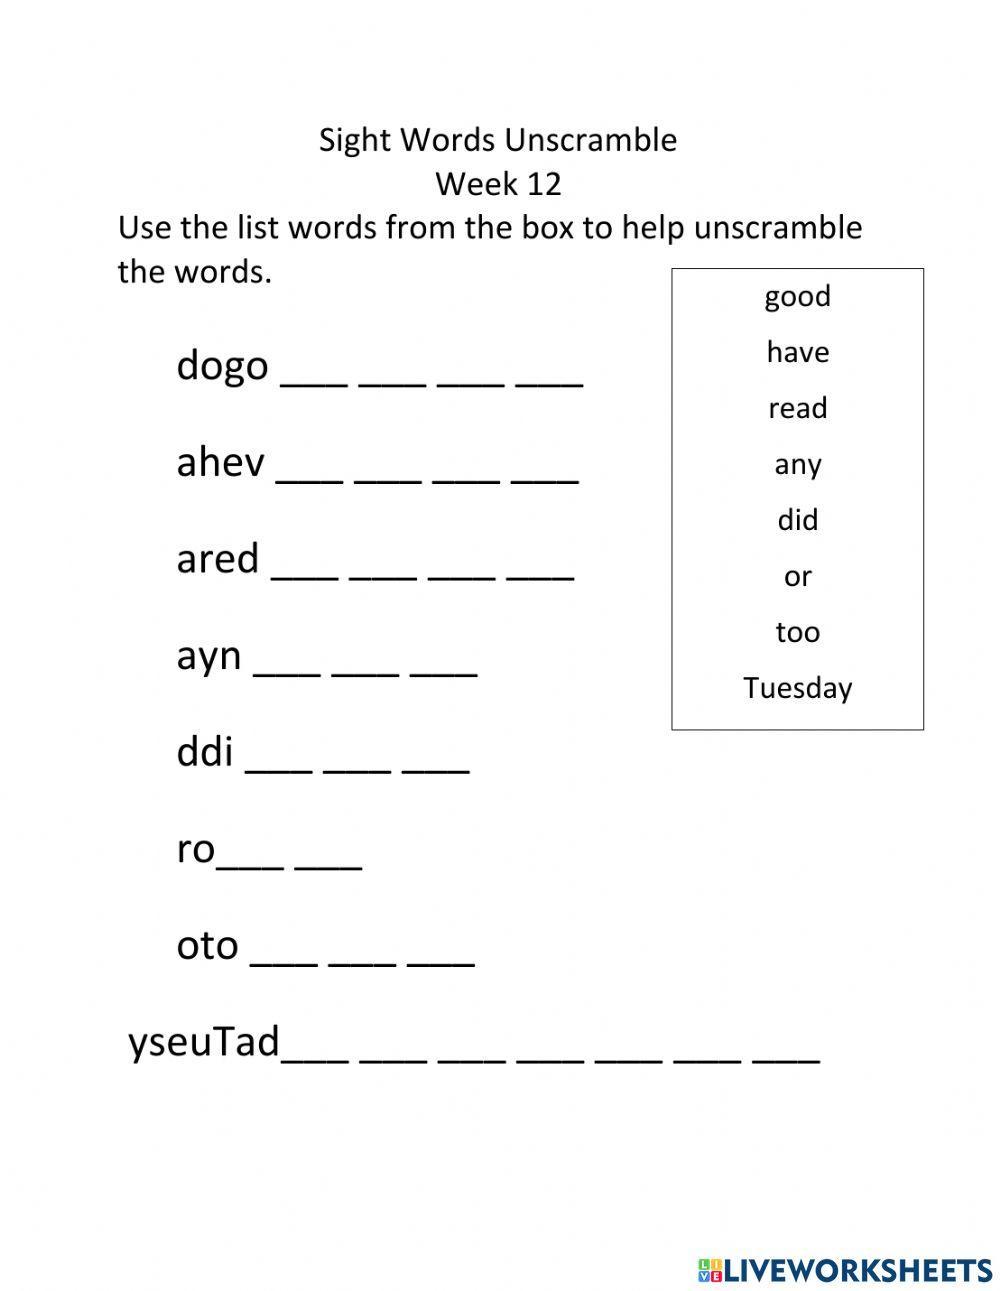 Sight Words Week 12 Unscramble